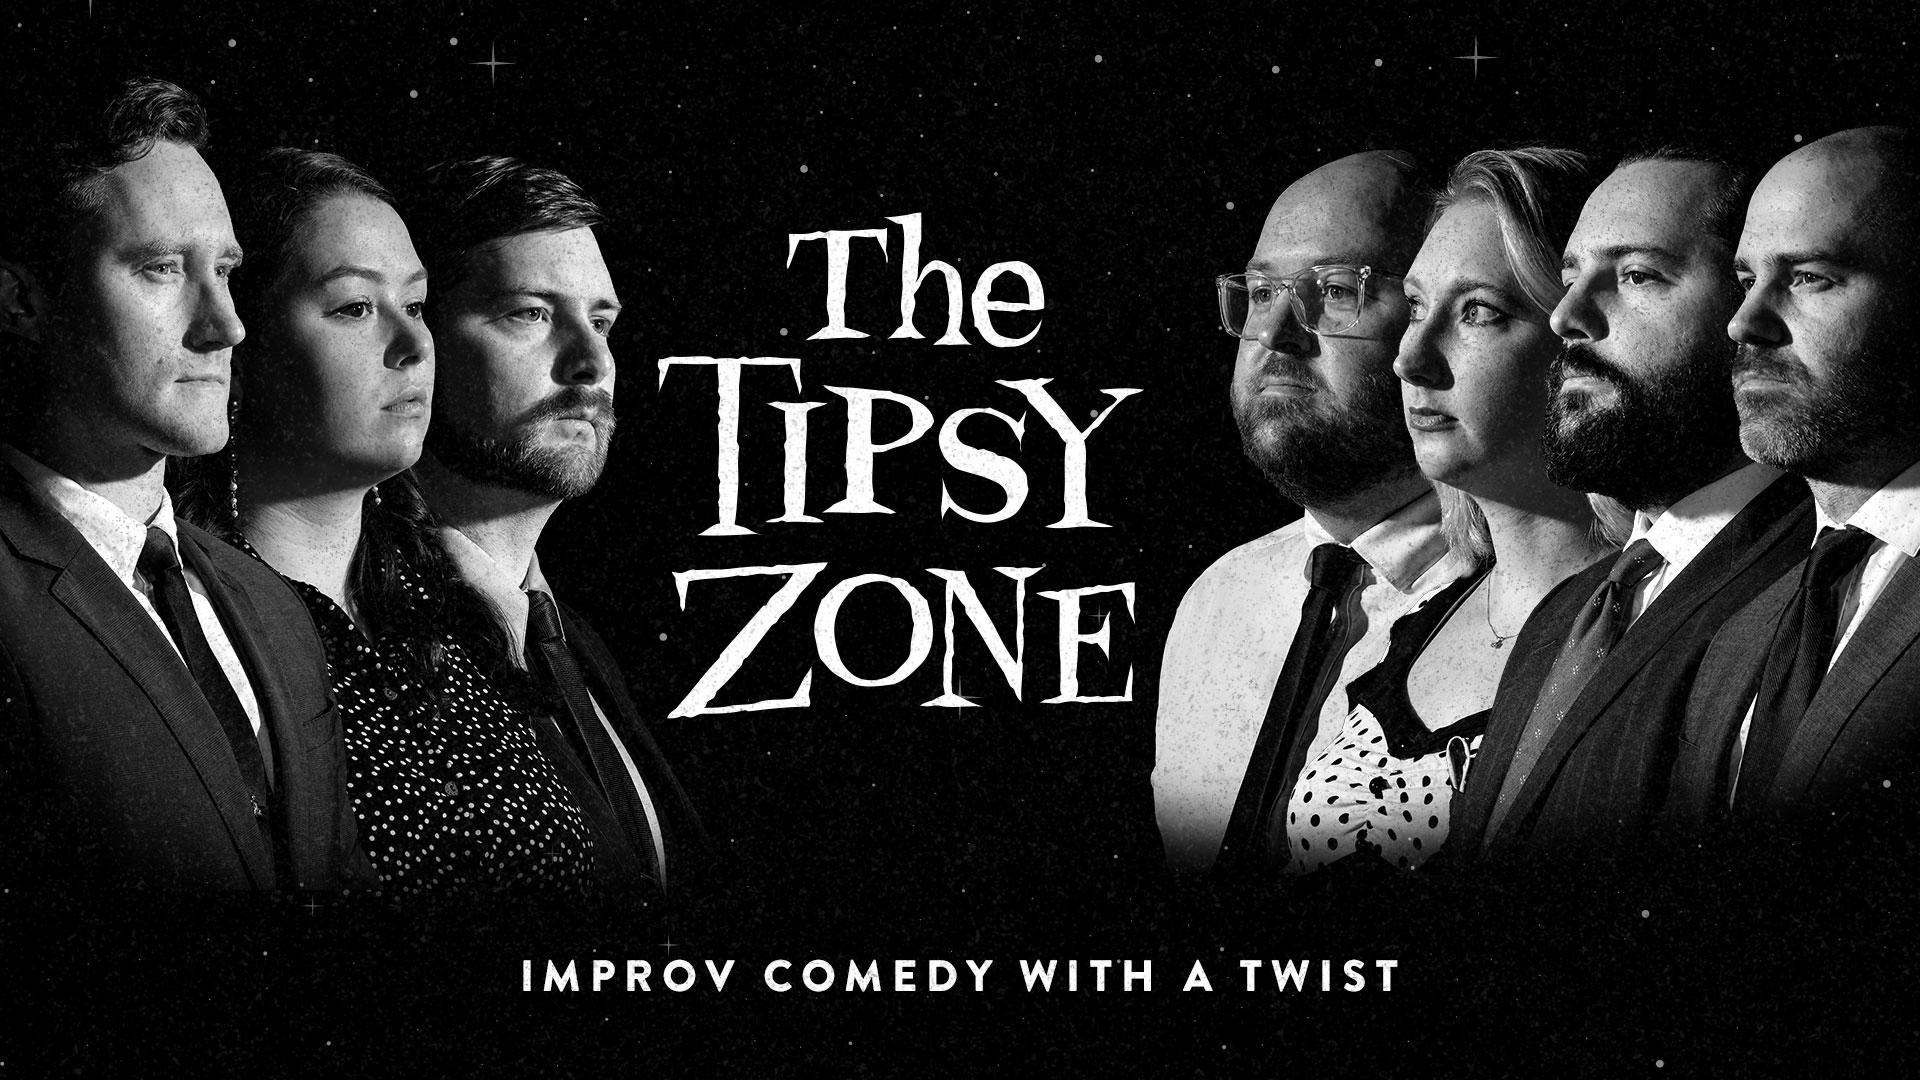 The Tipsy Zone